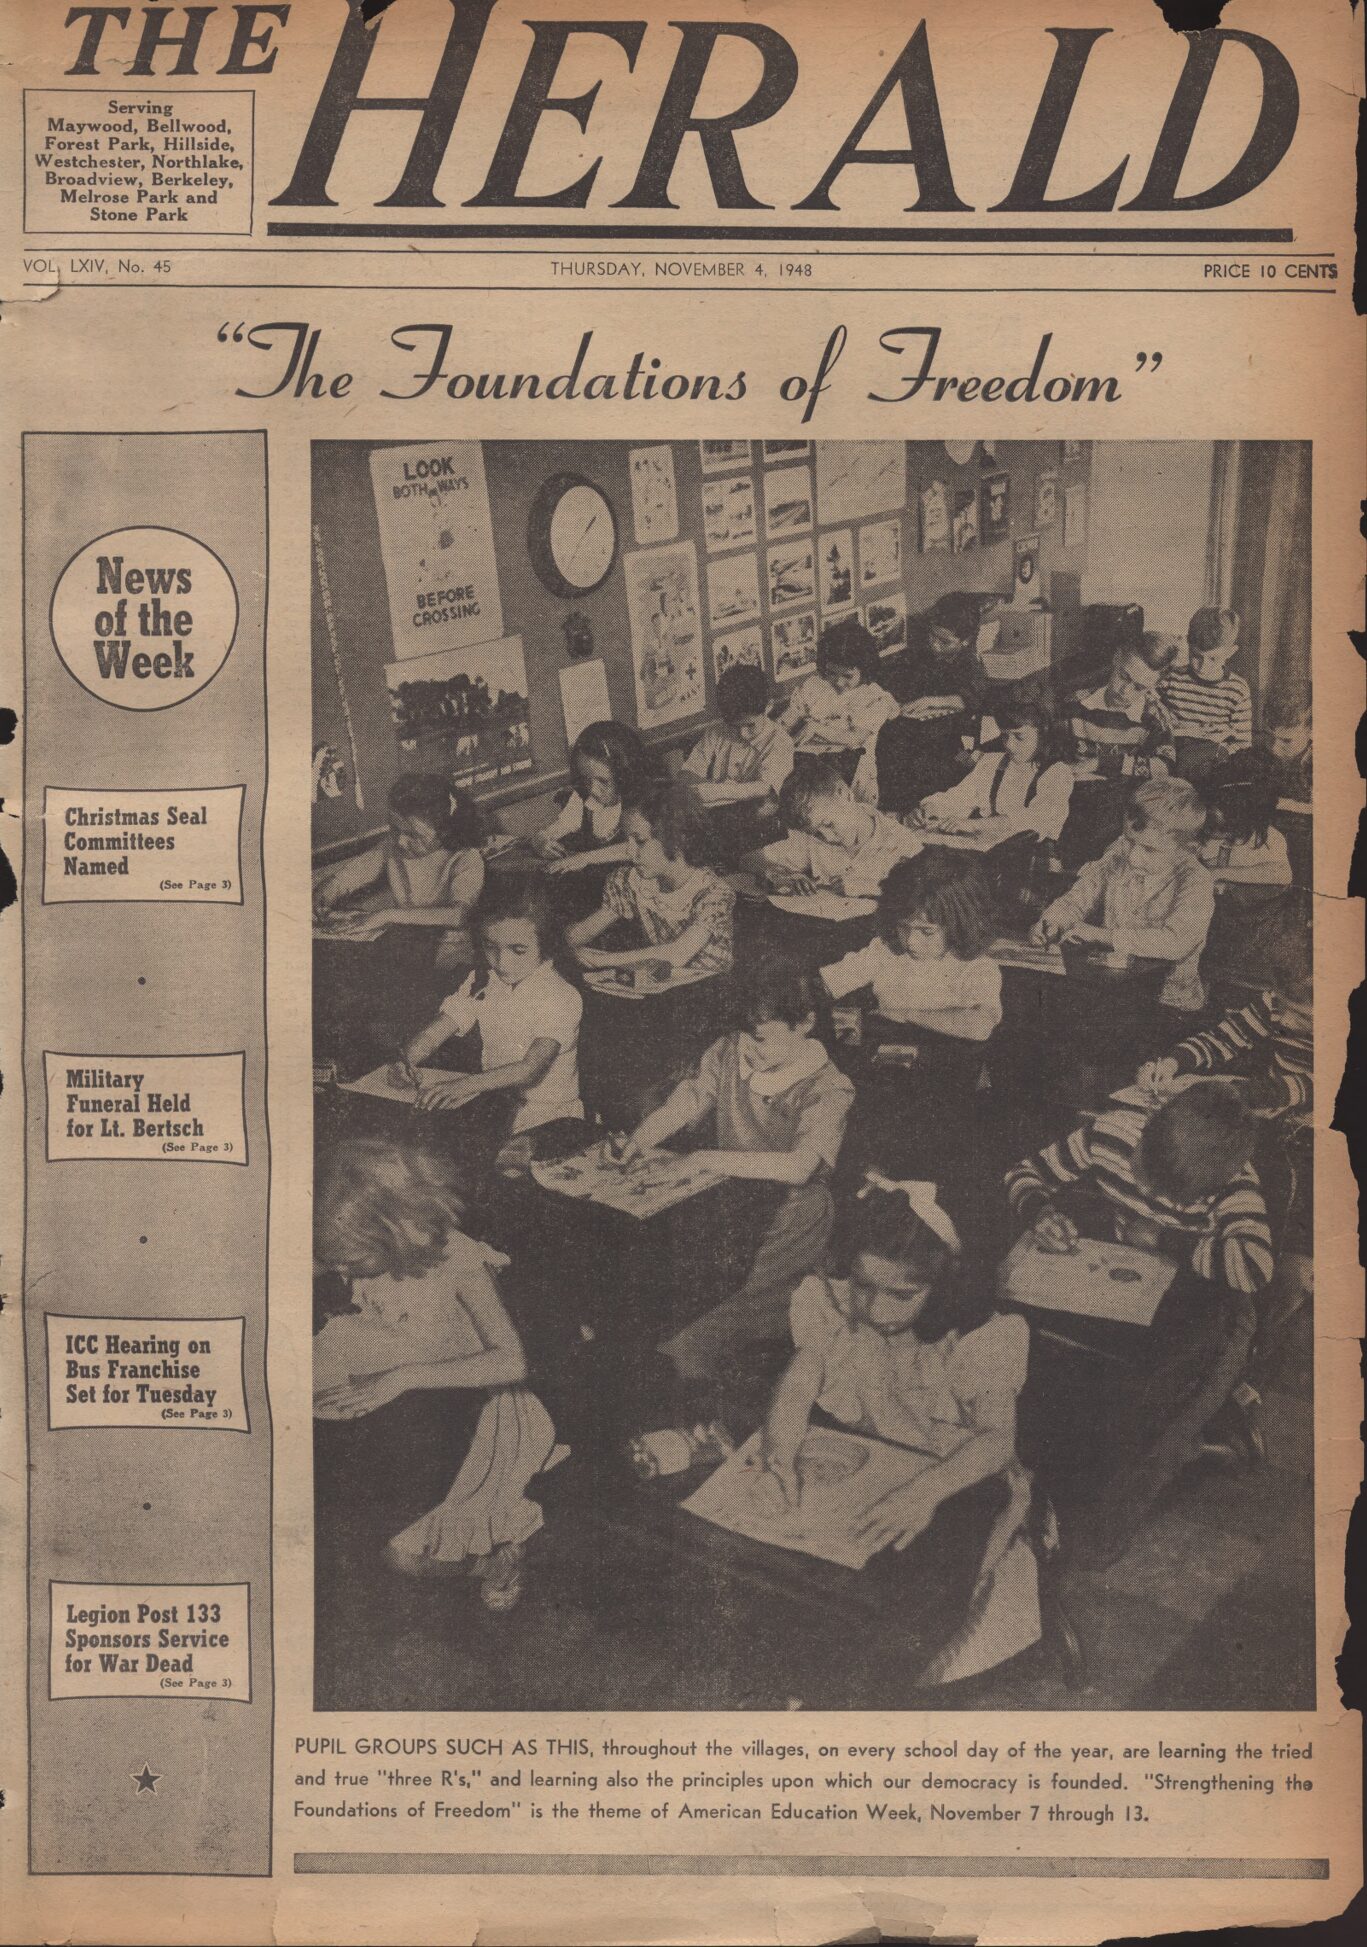 The Herald – 19481104